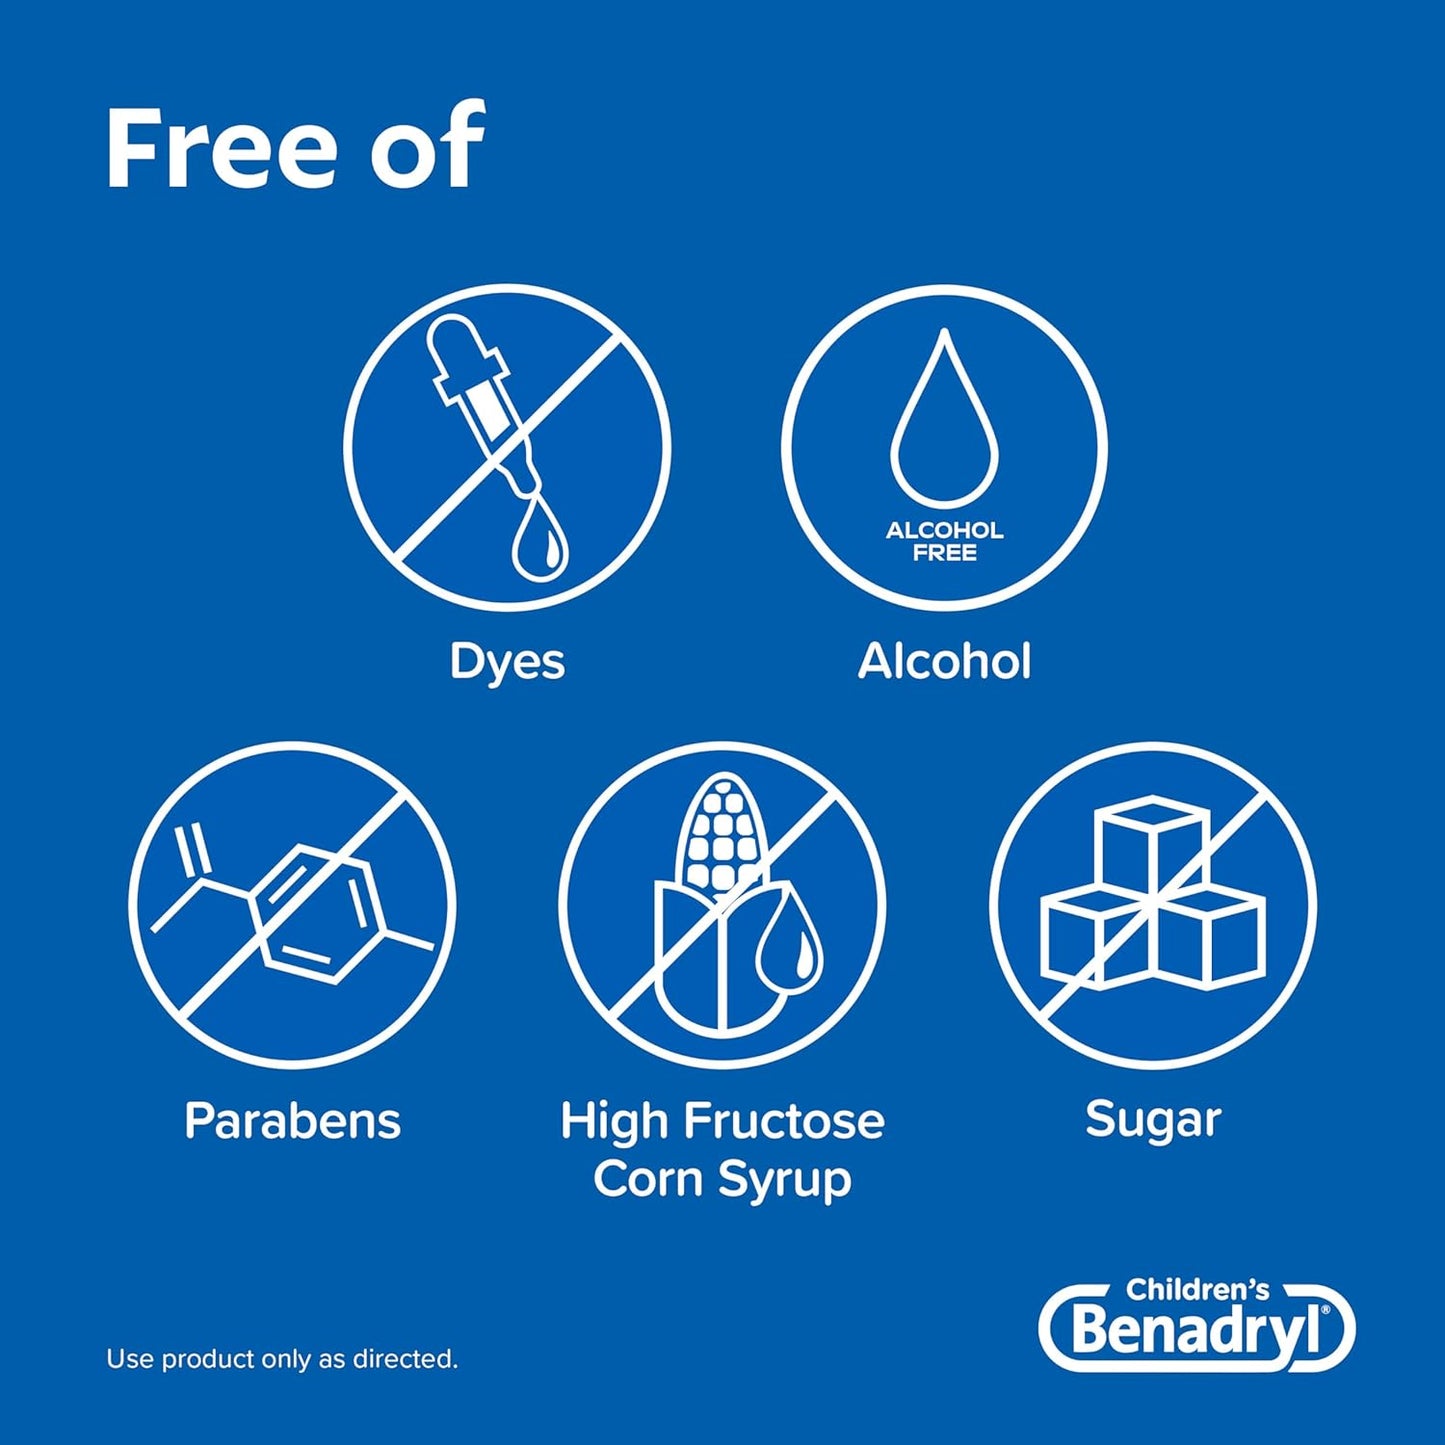 Benadryl Children's Dye-Free Allergy Liquid Antihistamine Relief Bubble Gum Flavor, 4 oz